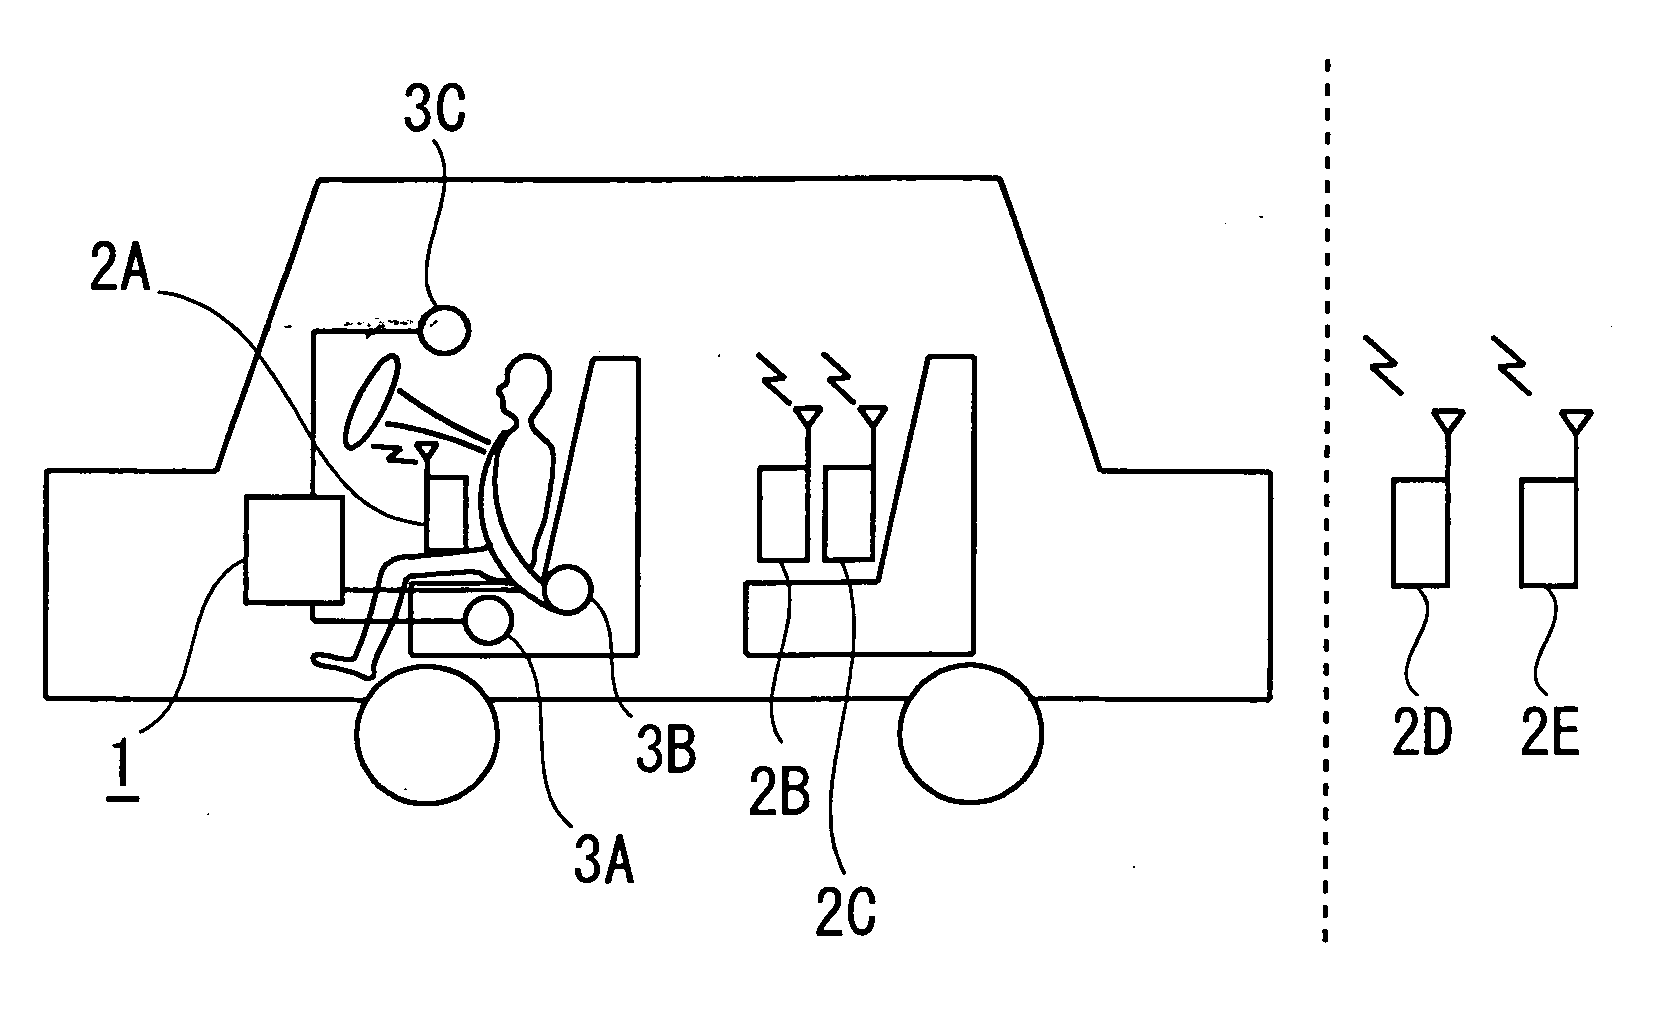 On-vehicle device